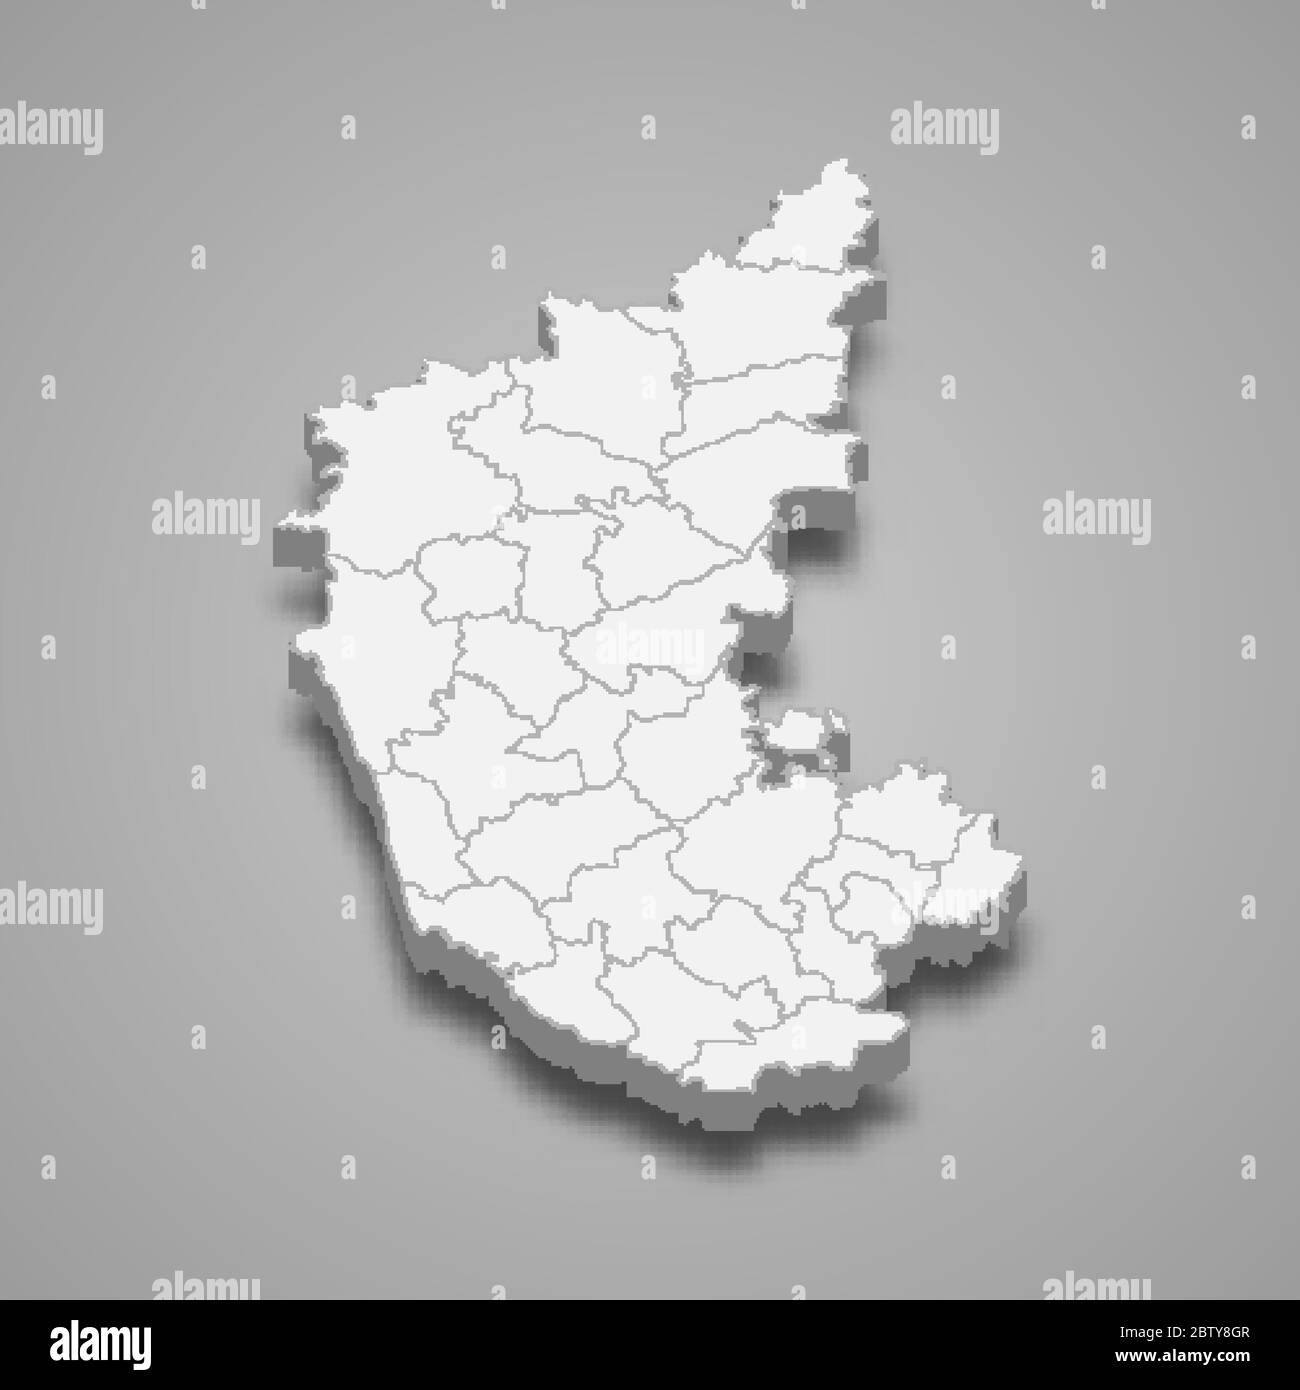 Karnataka map Black and White Stock Photos & Images - Alamy